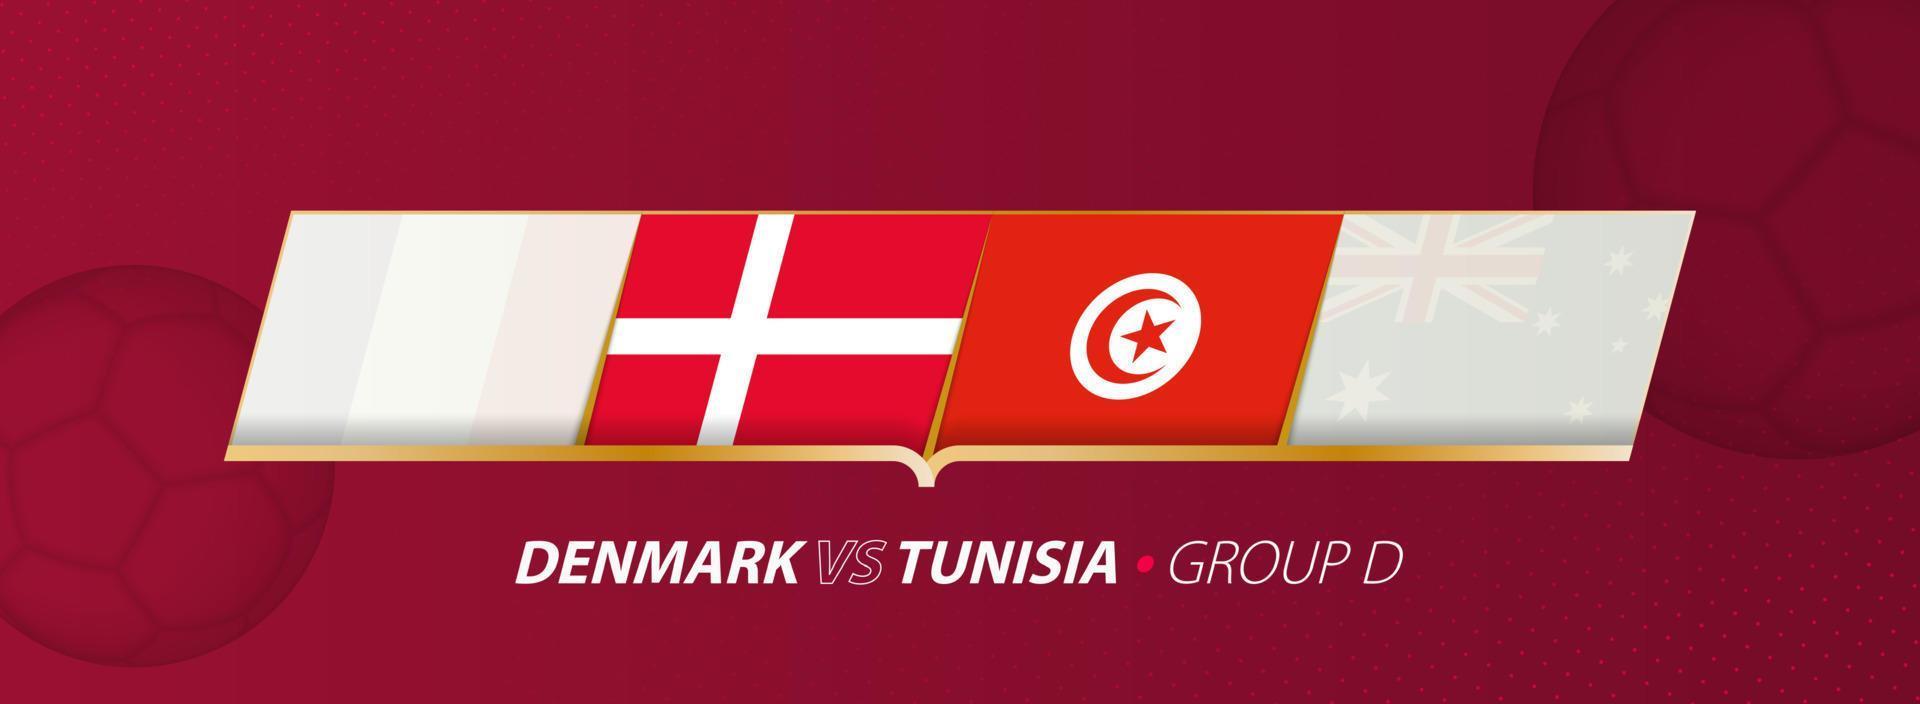 Danmark - tunisien fotboll match illustration i grupp a. vektor